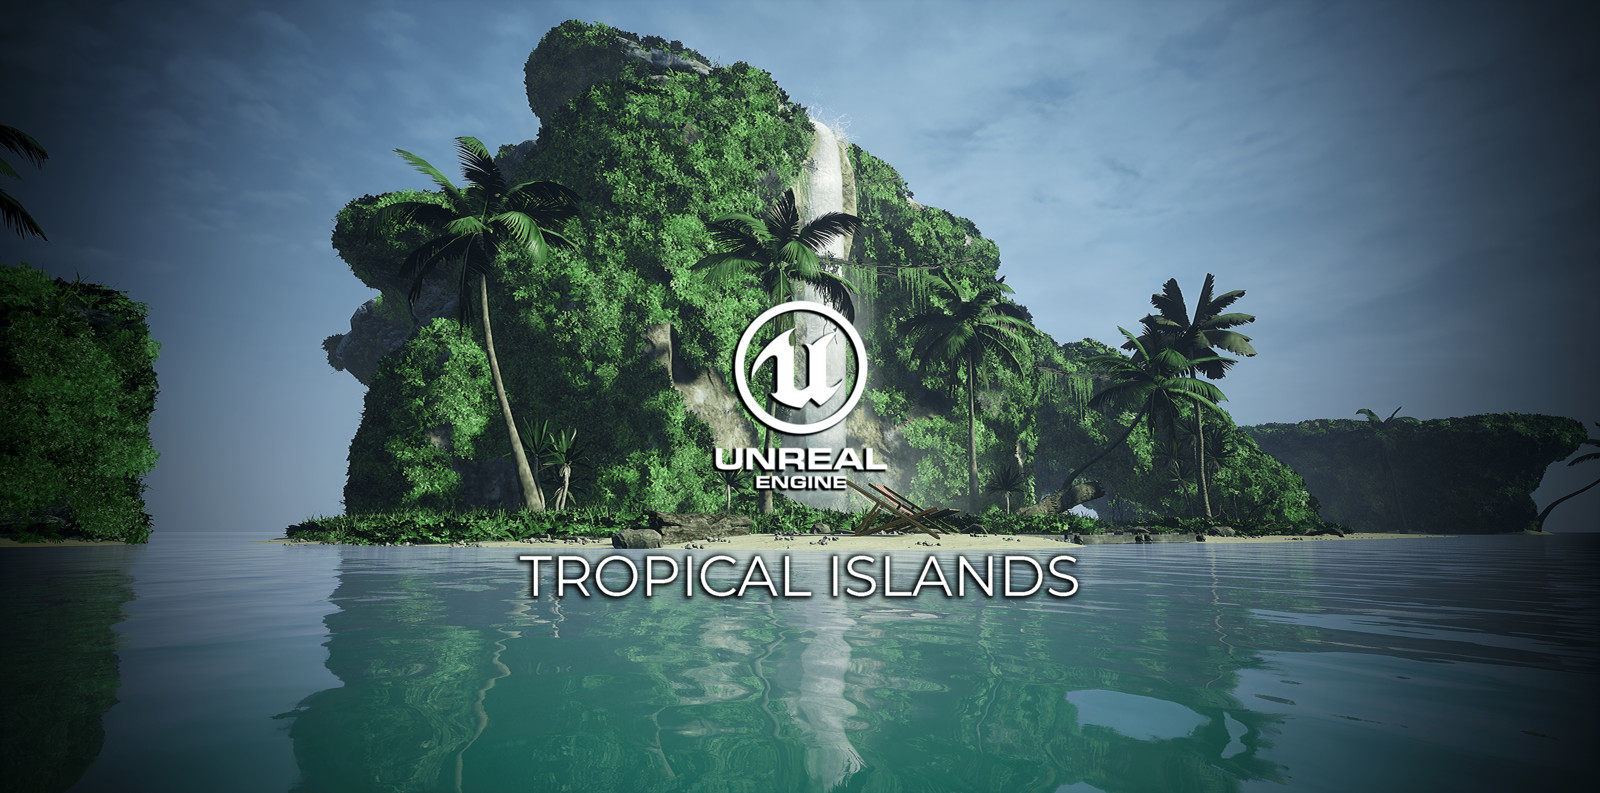 TROPICAL ISLANDS - Unreal Engine 4